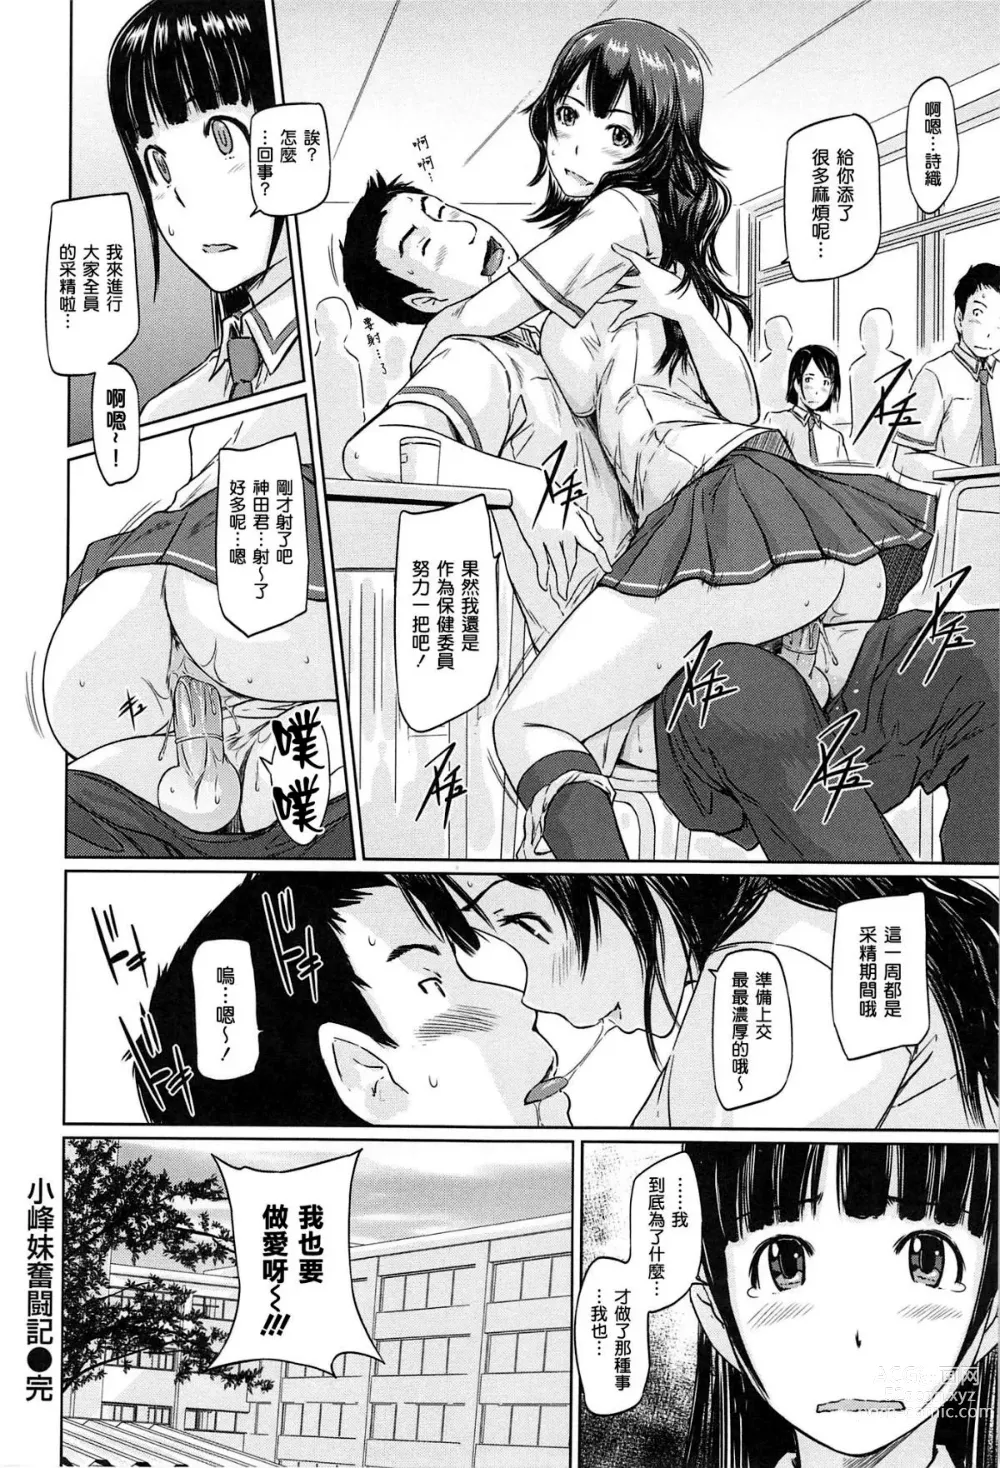 Page 222 of manga Welcome to Tokoharu Apartments (uncensored)